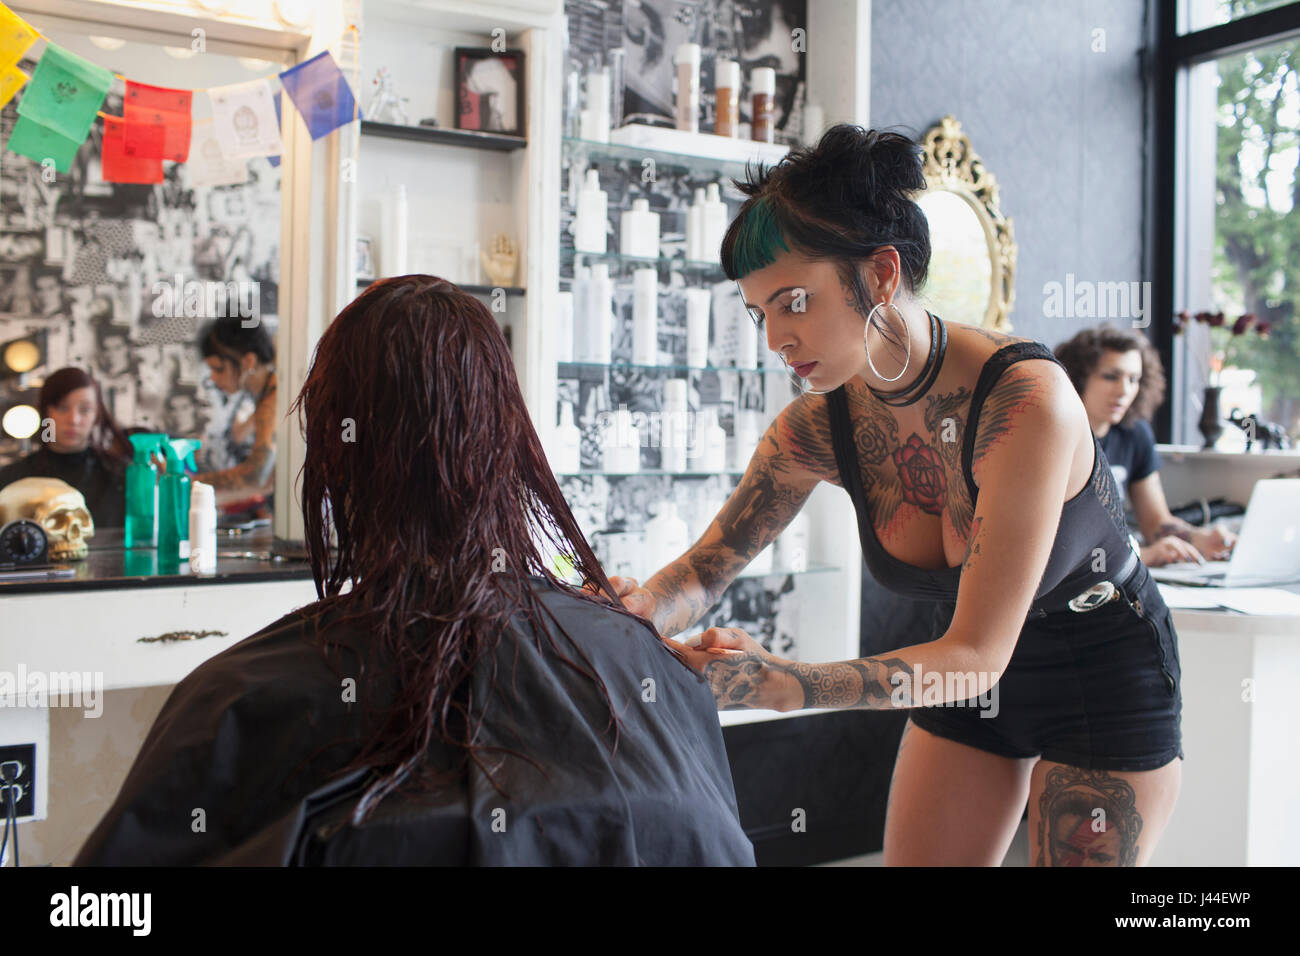 A hair dresser styling a customer's hair. Stock Photo